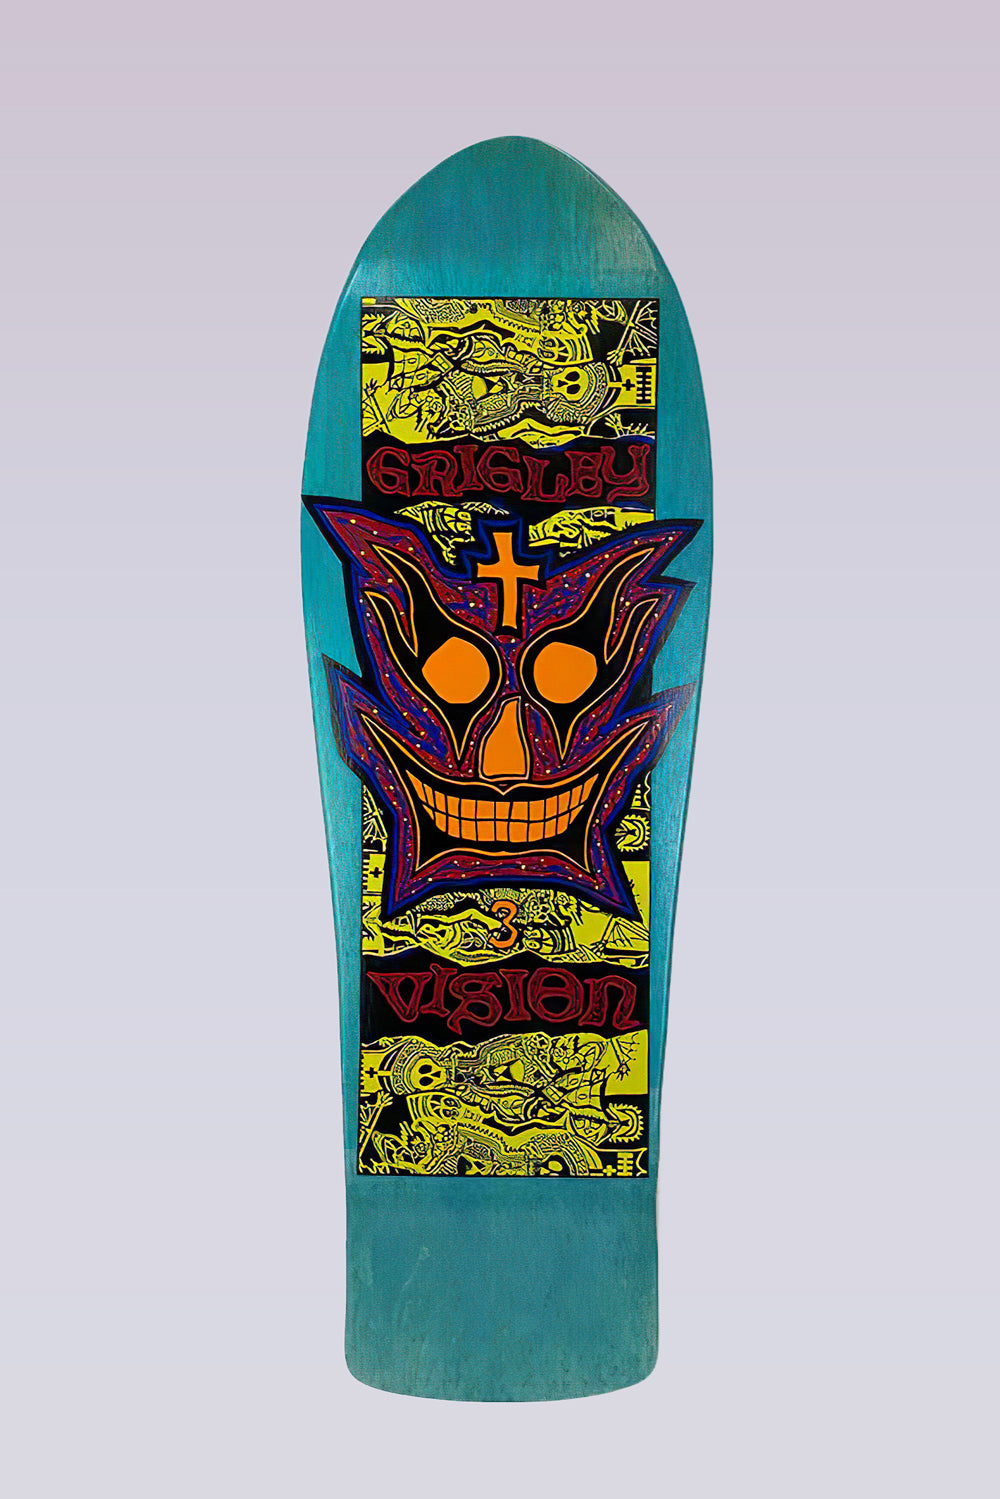 Grigley III Skateboard Deck 9.75"X31" - Turquoise Stain